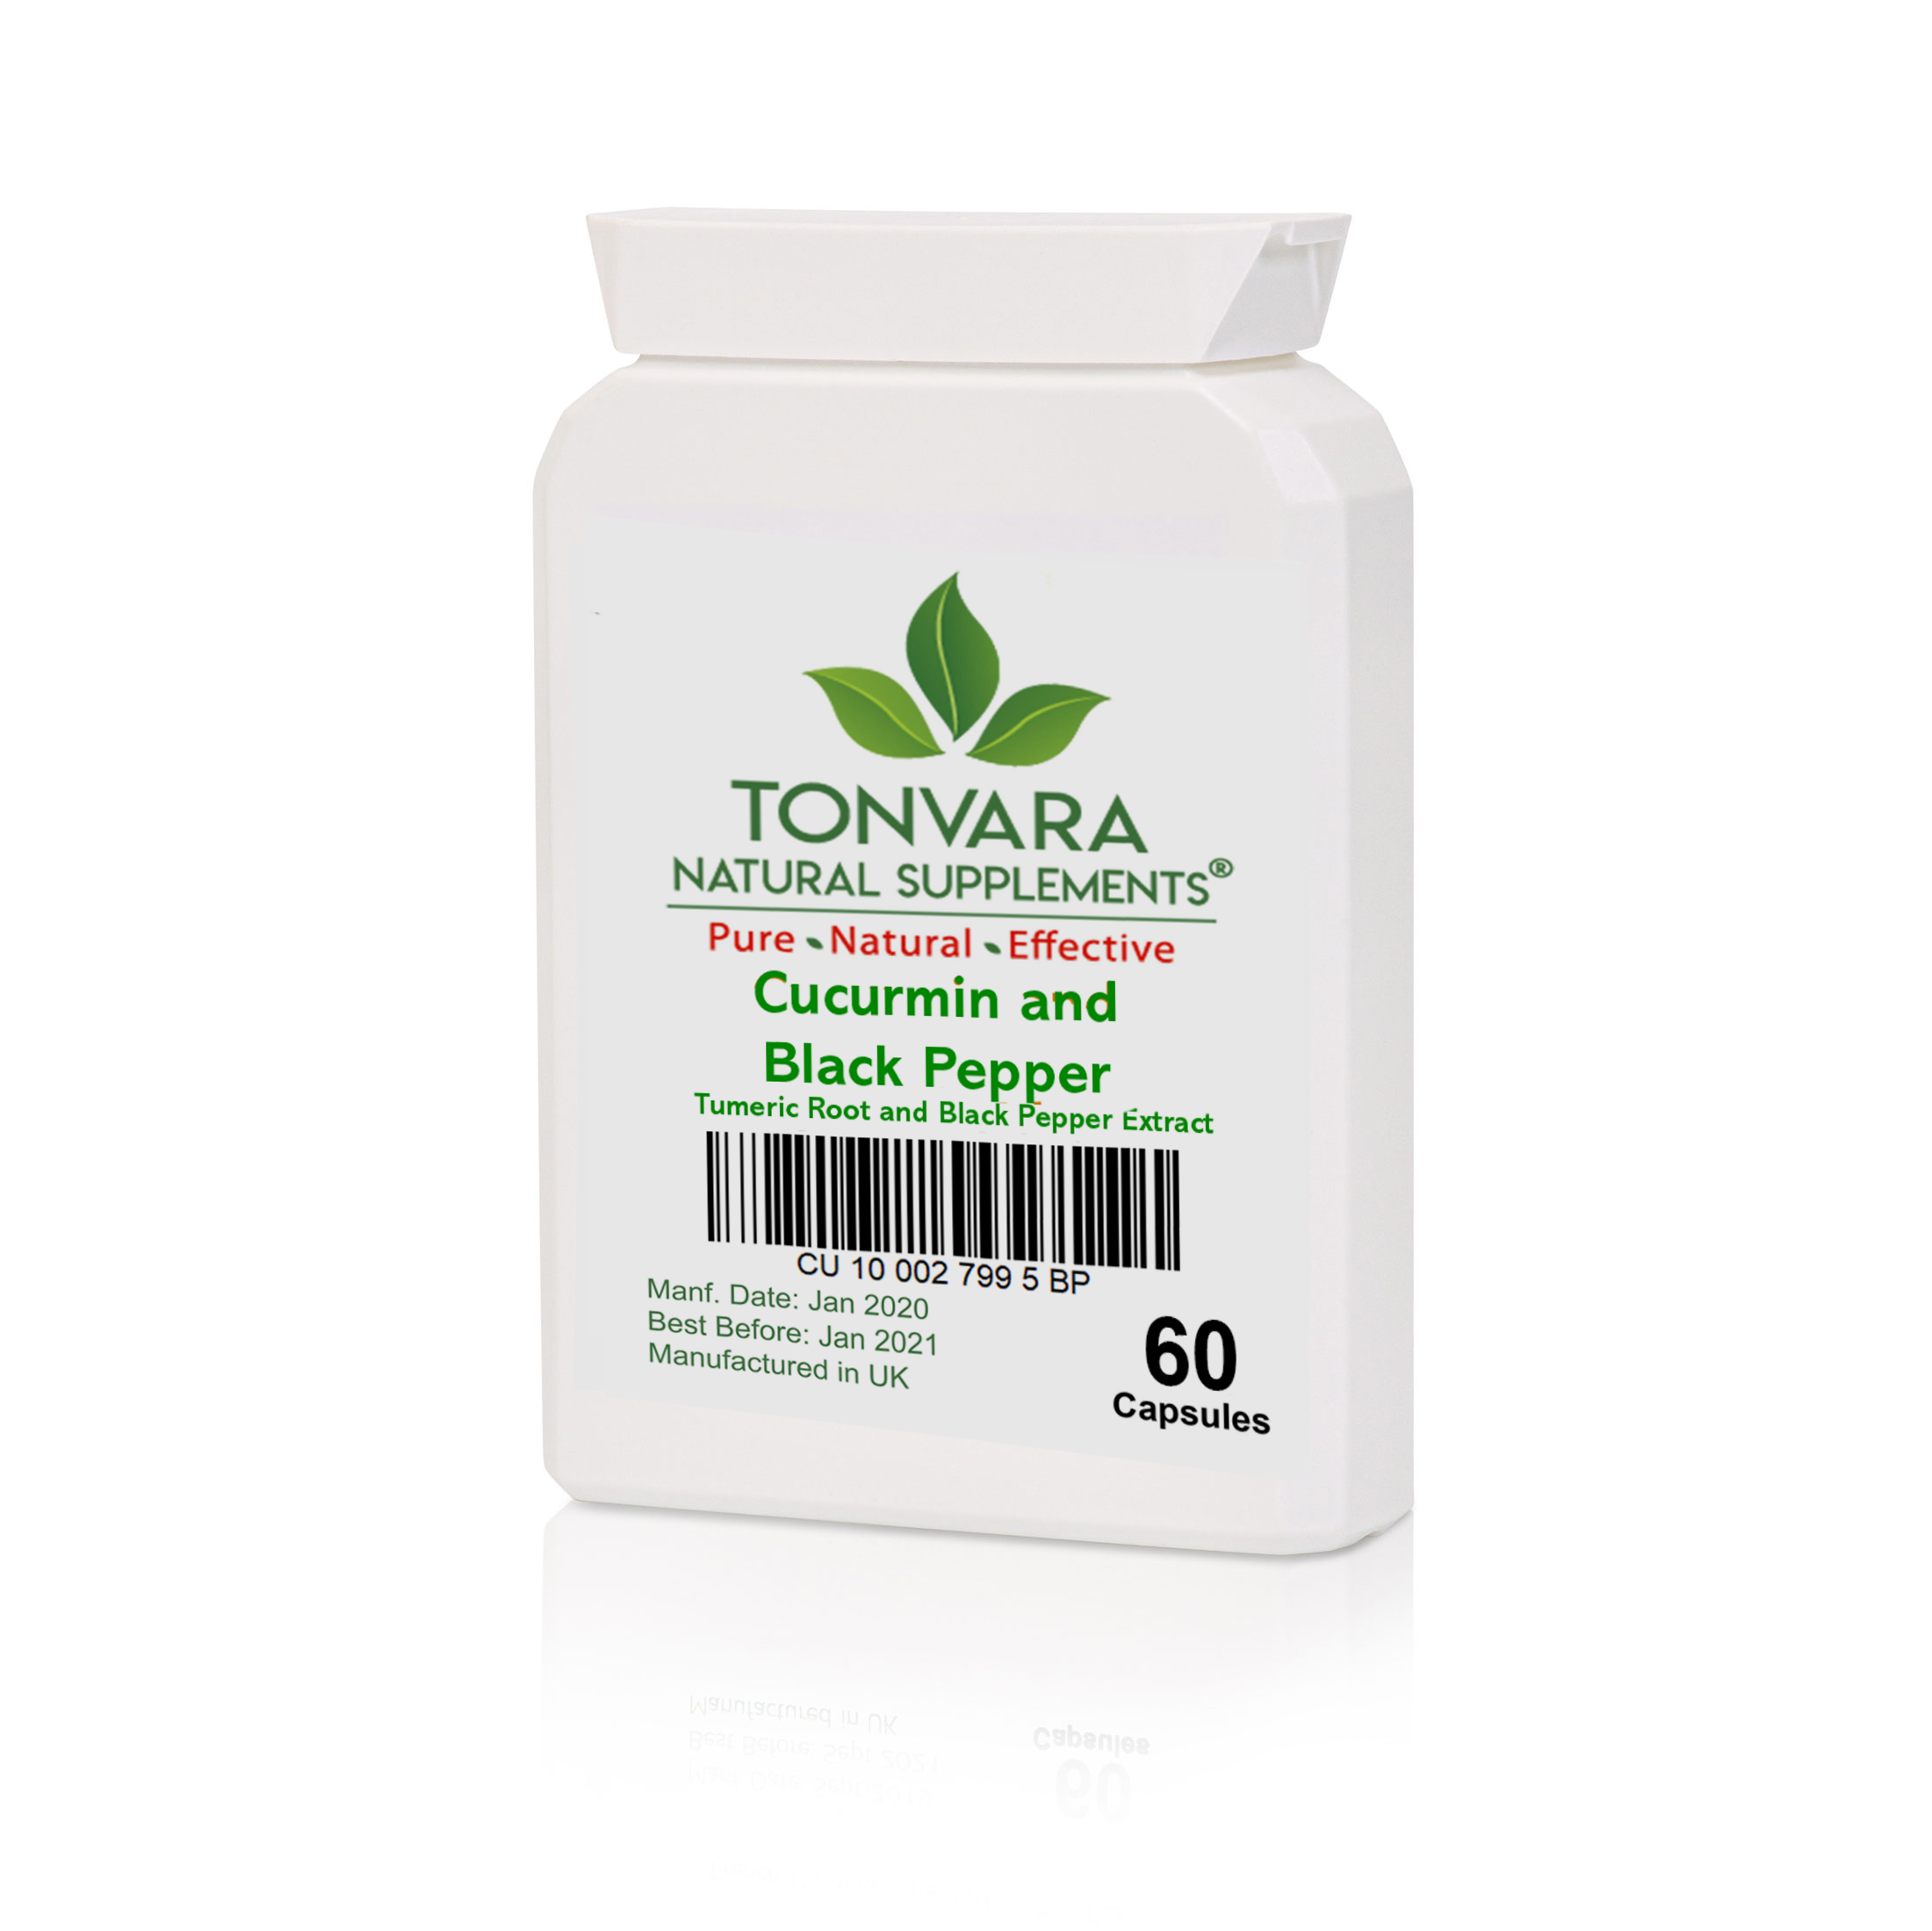 Tonvara Cucurmin and Black Pepper Extract - Tumeric Root and Black Pepper Extract